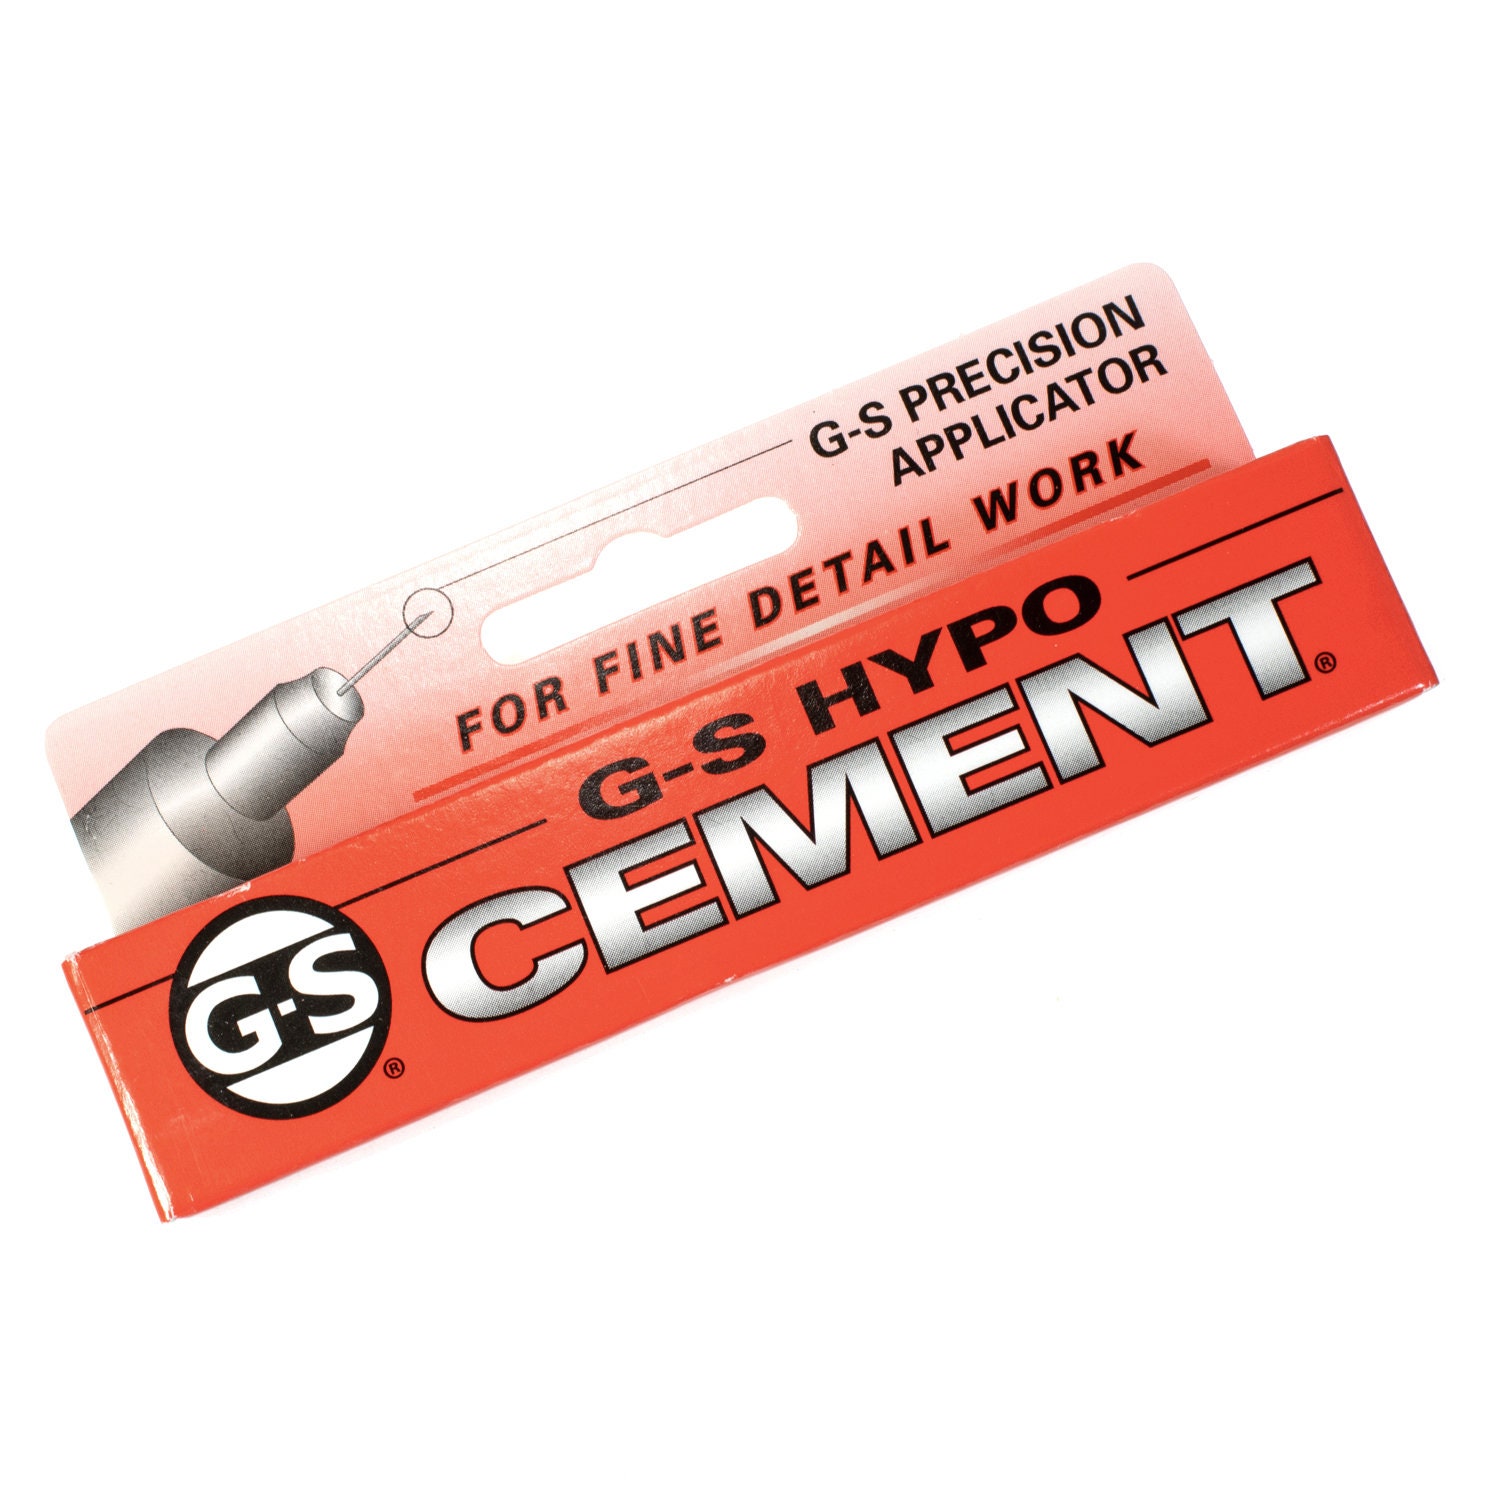 G-S Hypo Tube Cement